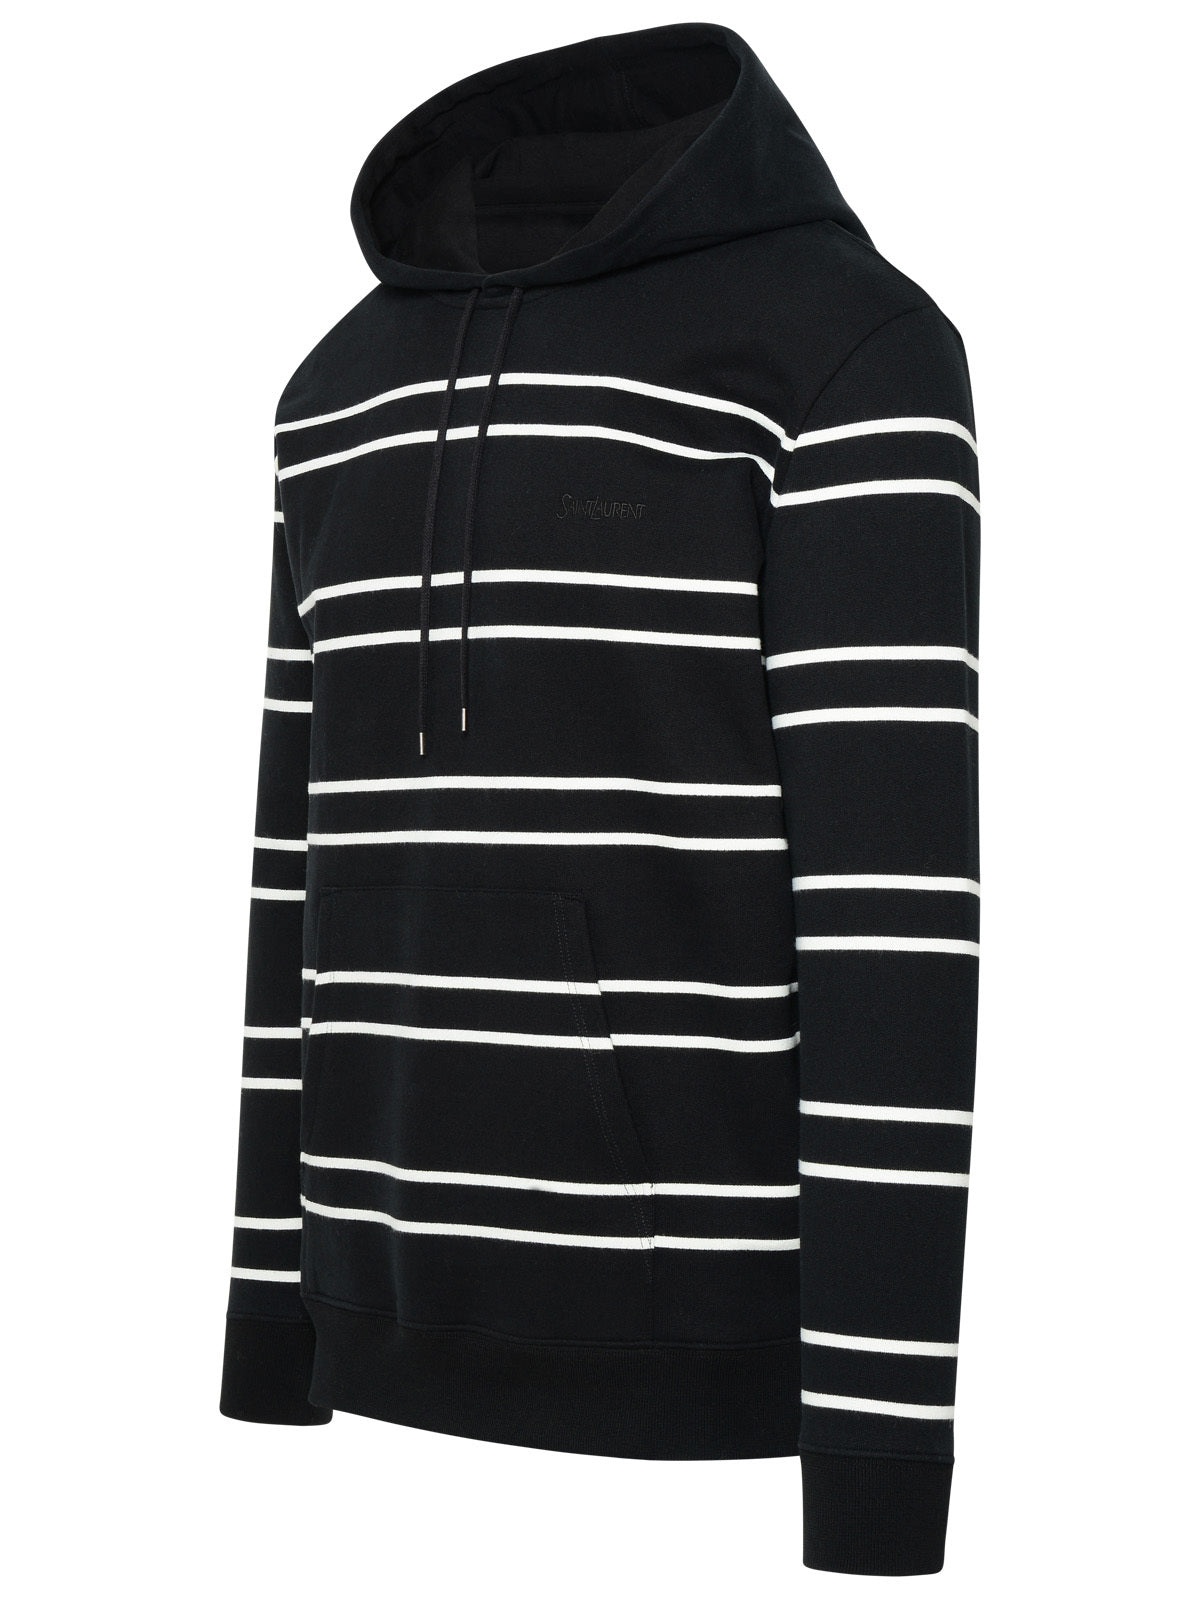 Saint Laurent Man Black Cotton Sweatshirt - 2